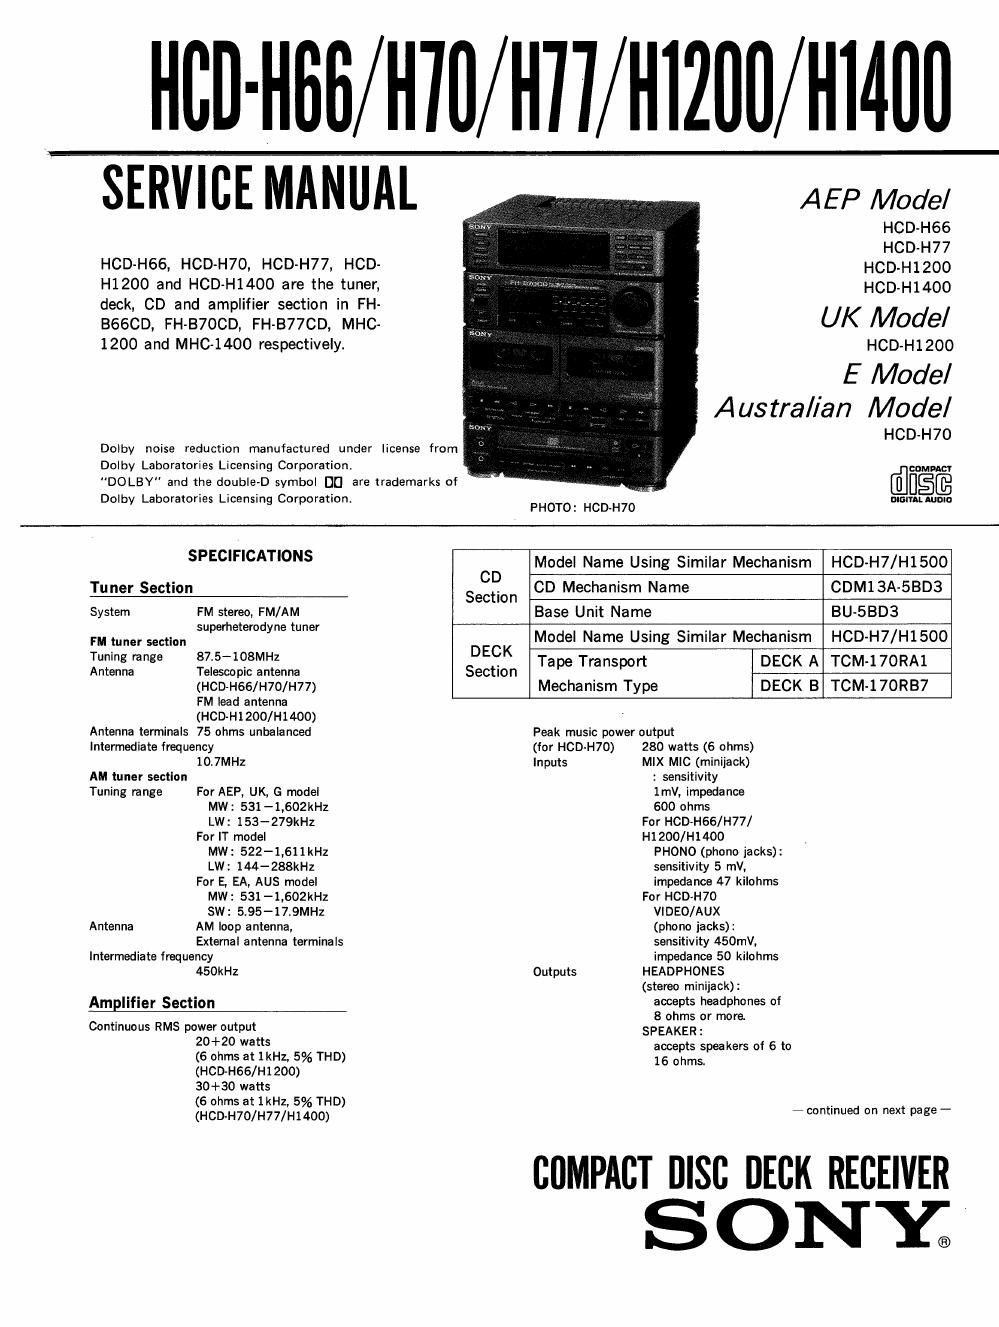 sony hcd h 1400 service manual